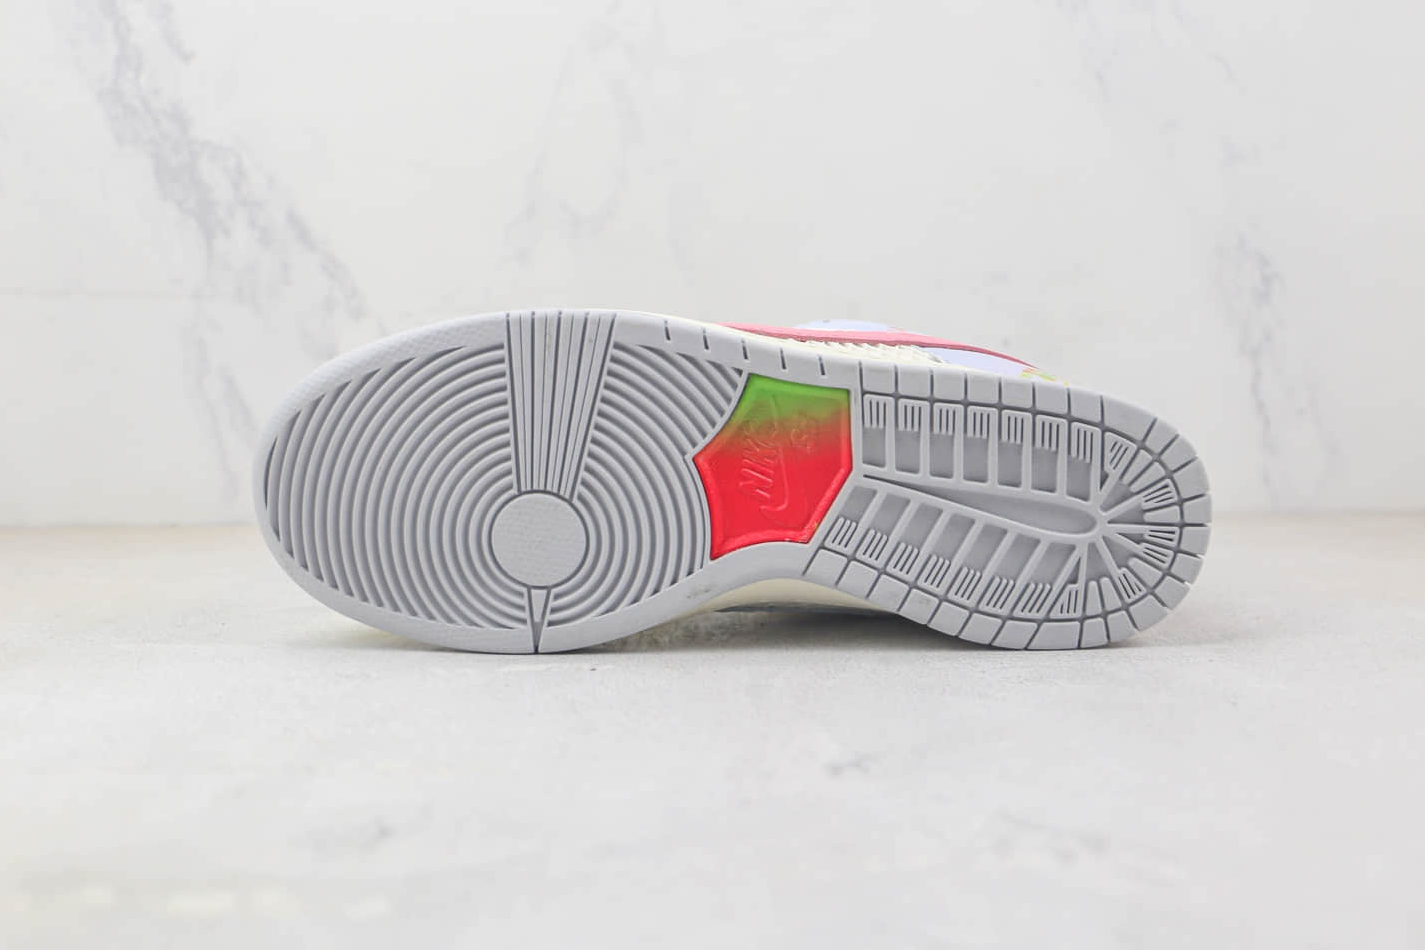 Nike Xavier Schipani x Dunk Low SB 'Be True - Trans Joy' DX5933-900 | Limited Edition Sneakers